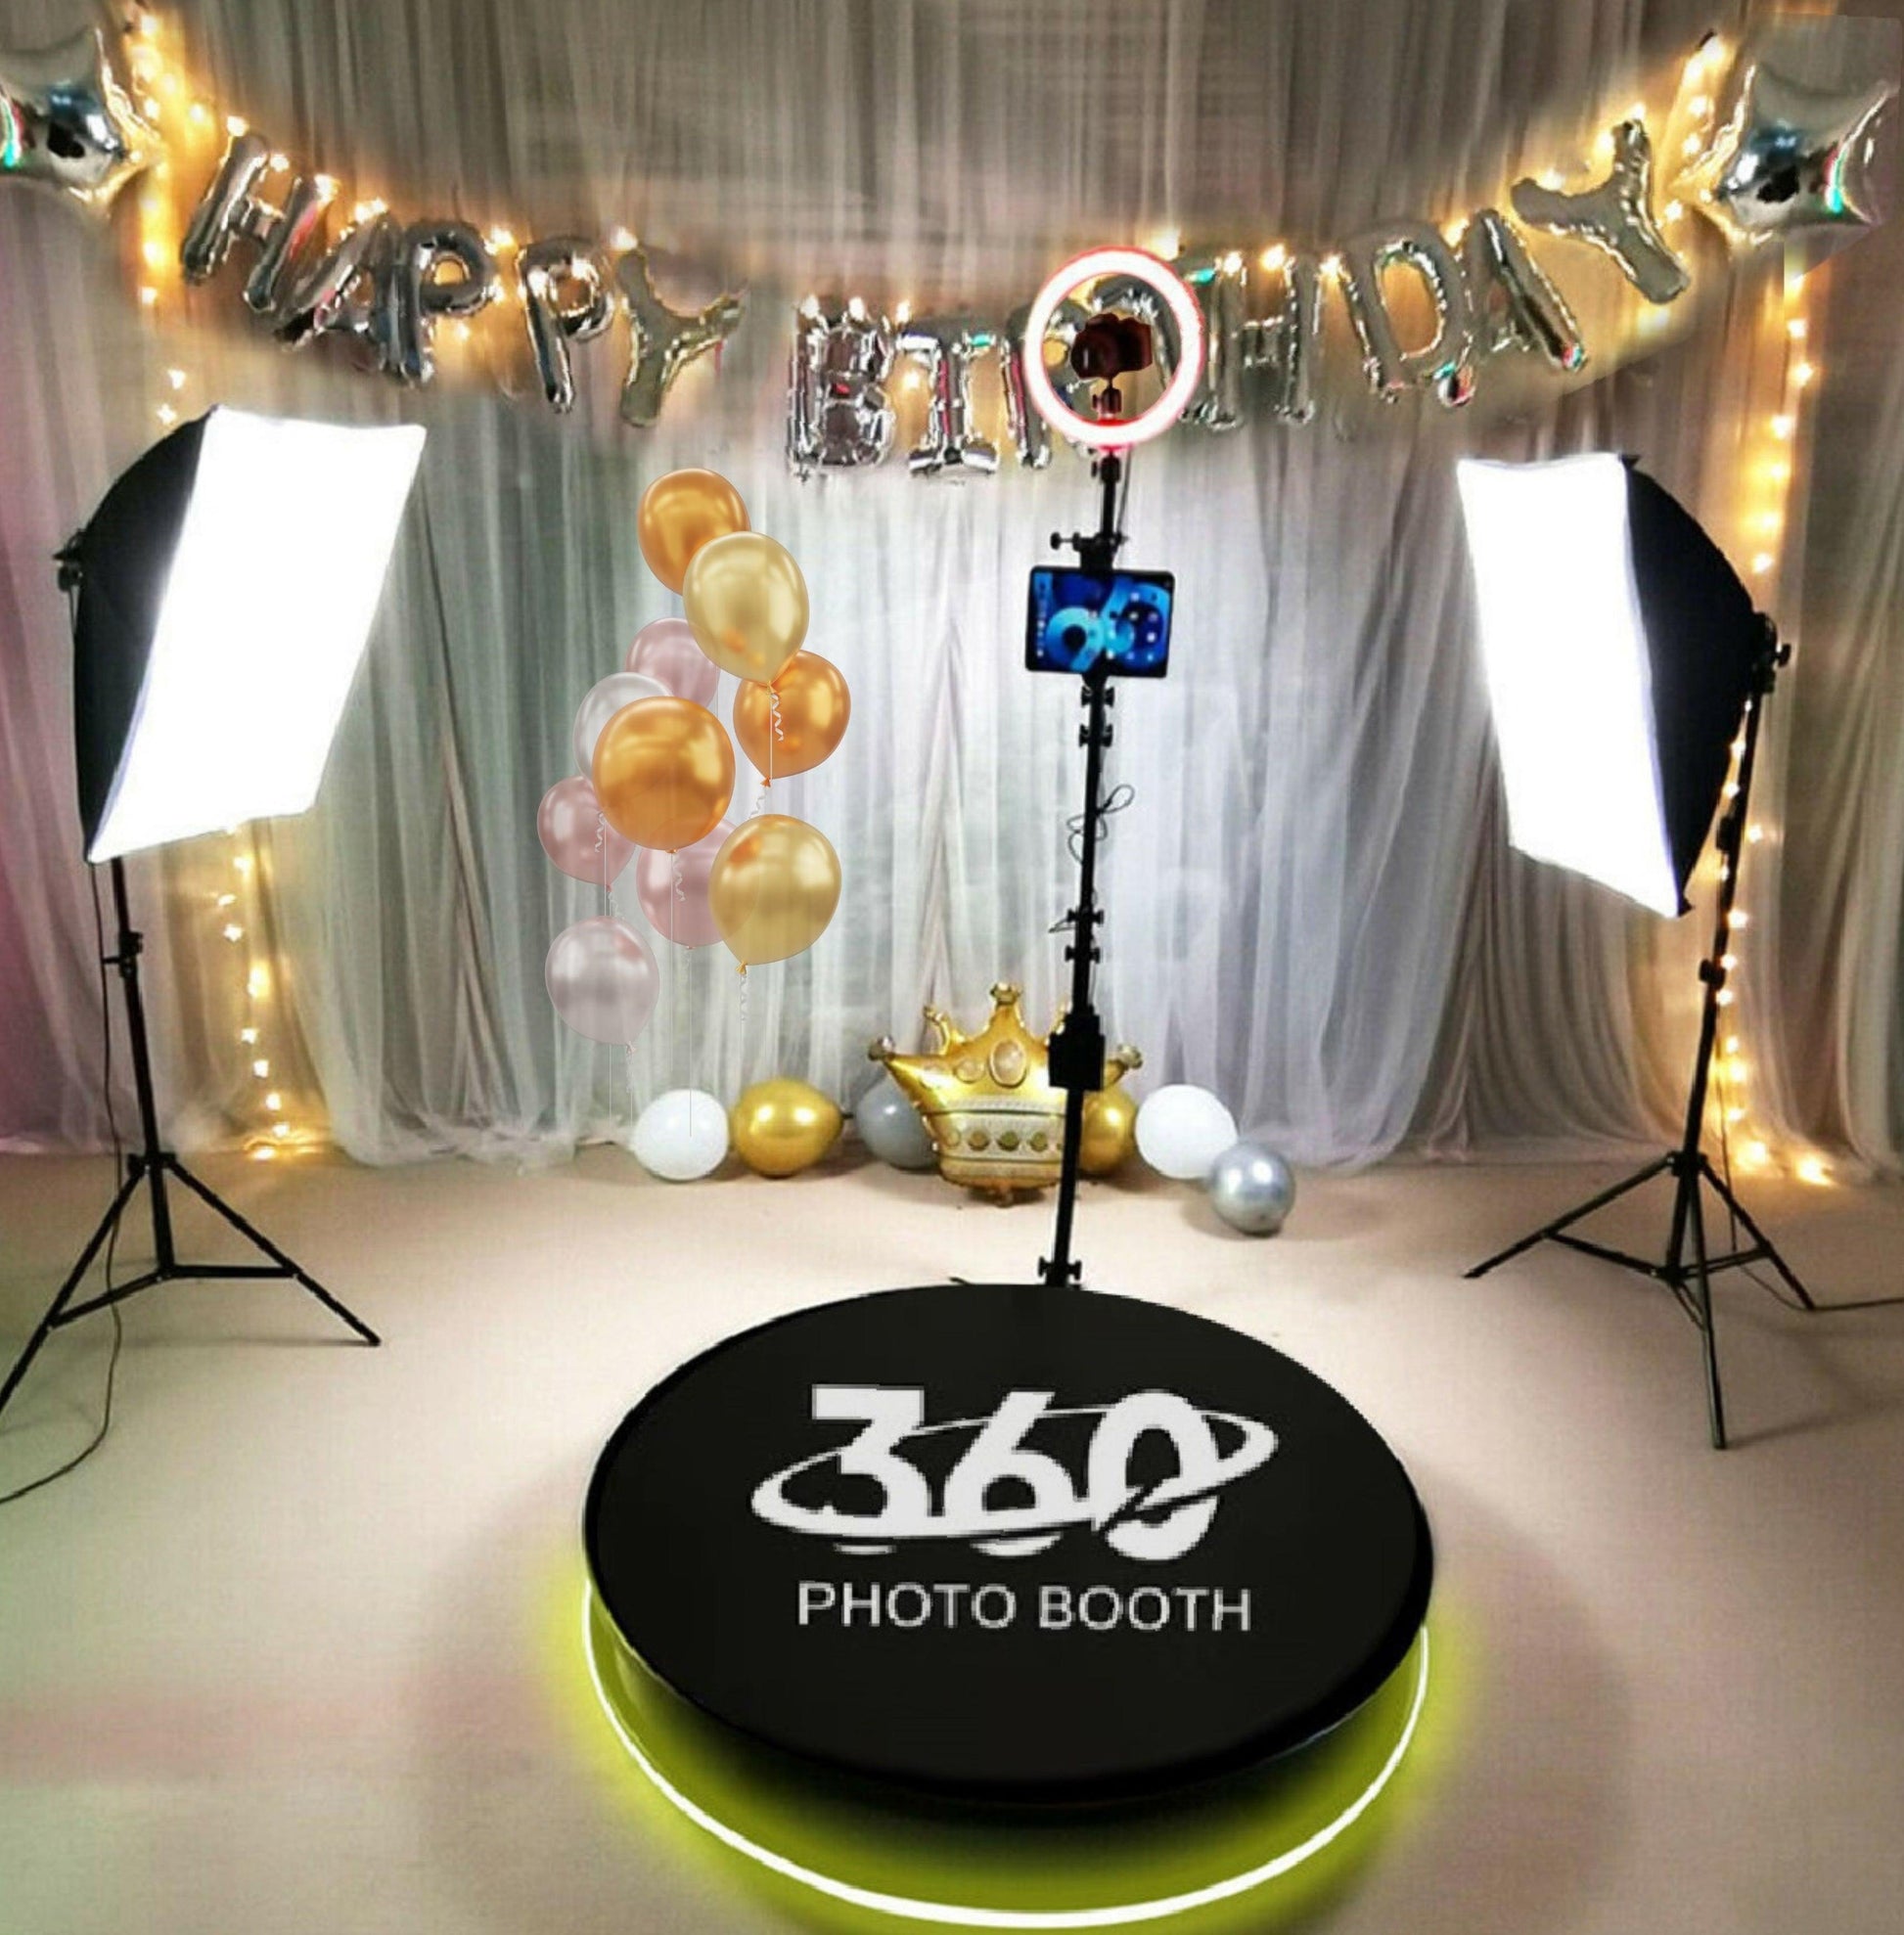 360 Photobooth | 27-32-39 inch Motorized